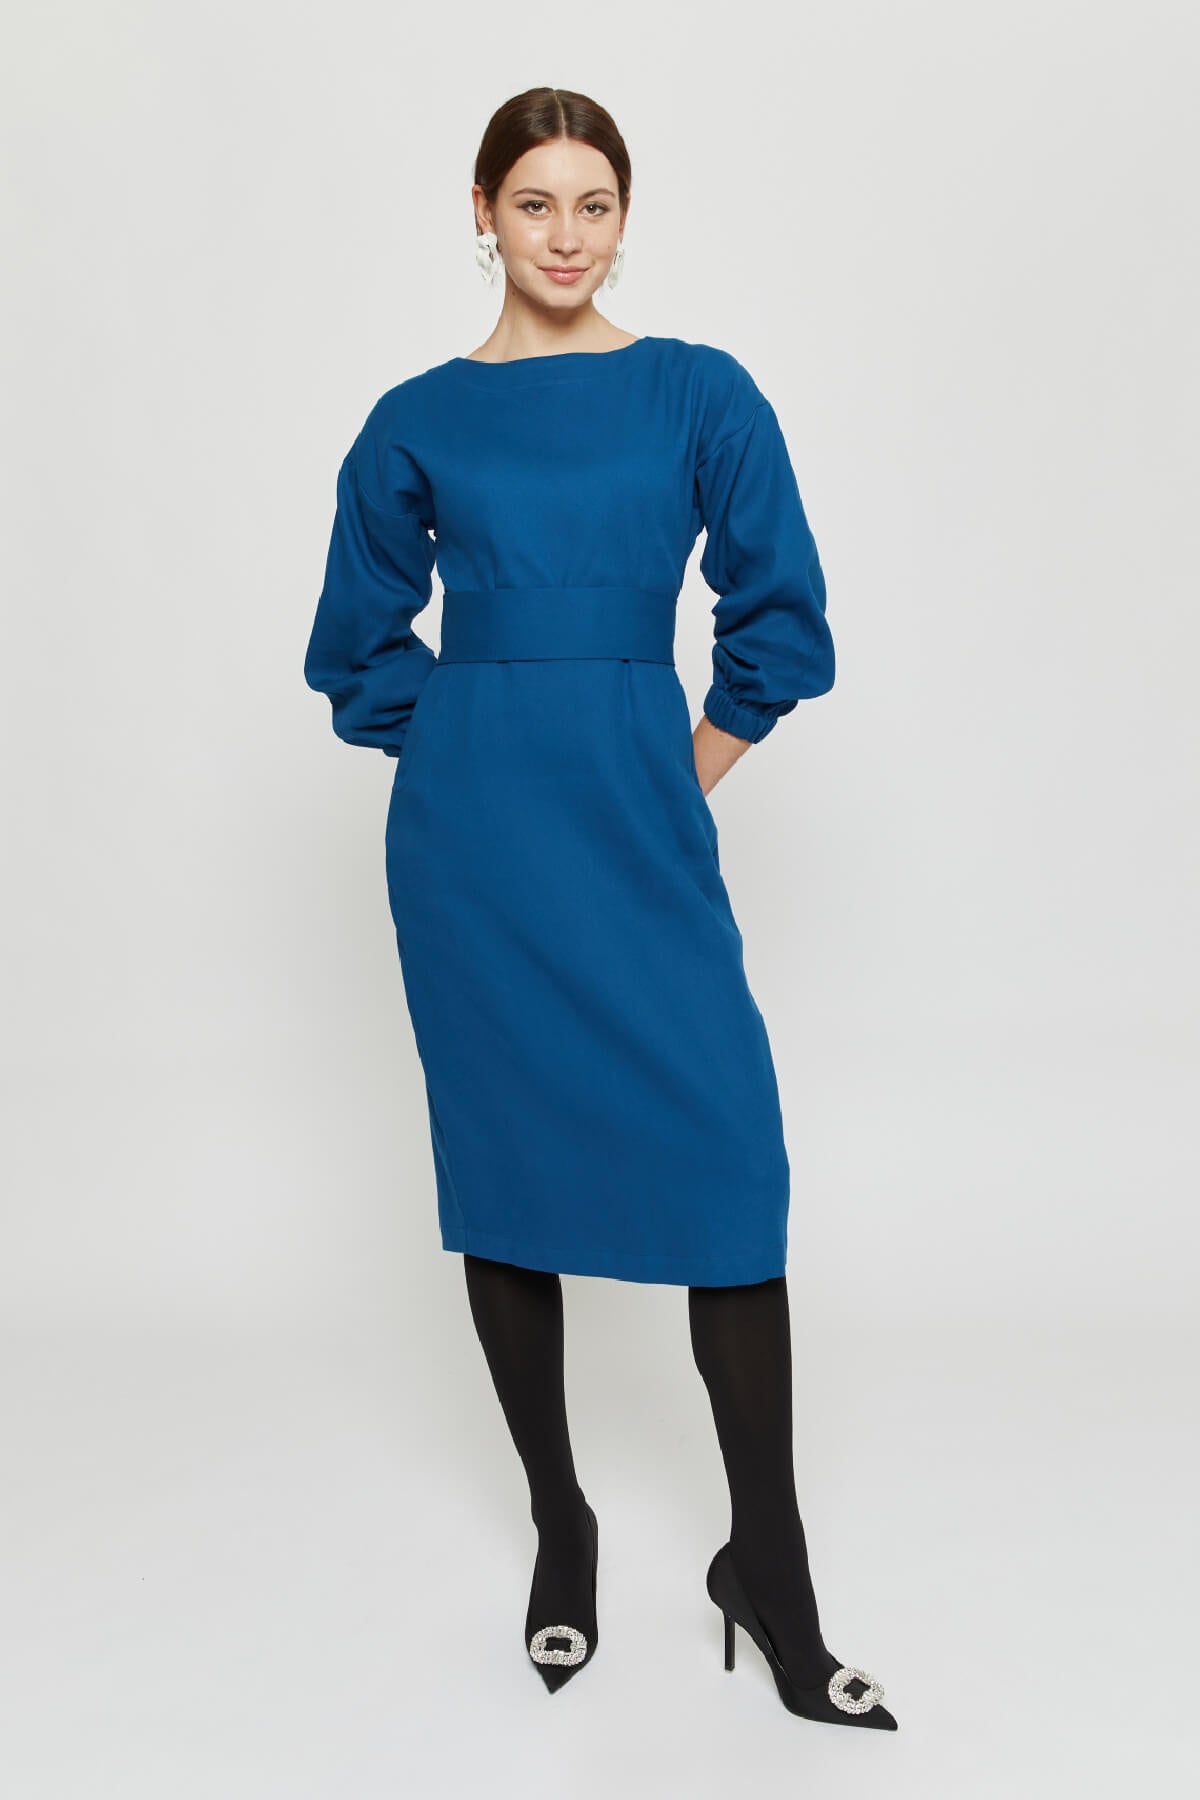 Stefanie | Dress with Kimono Belt in Petrol-Blue